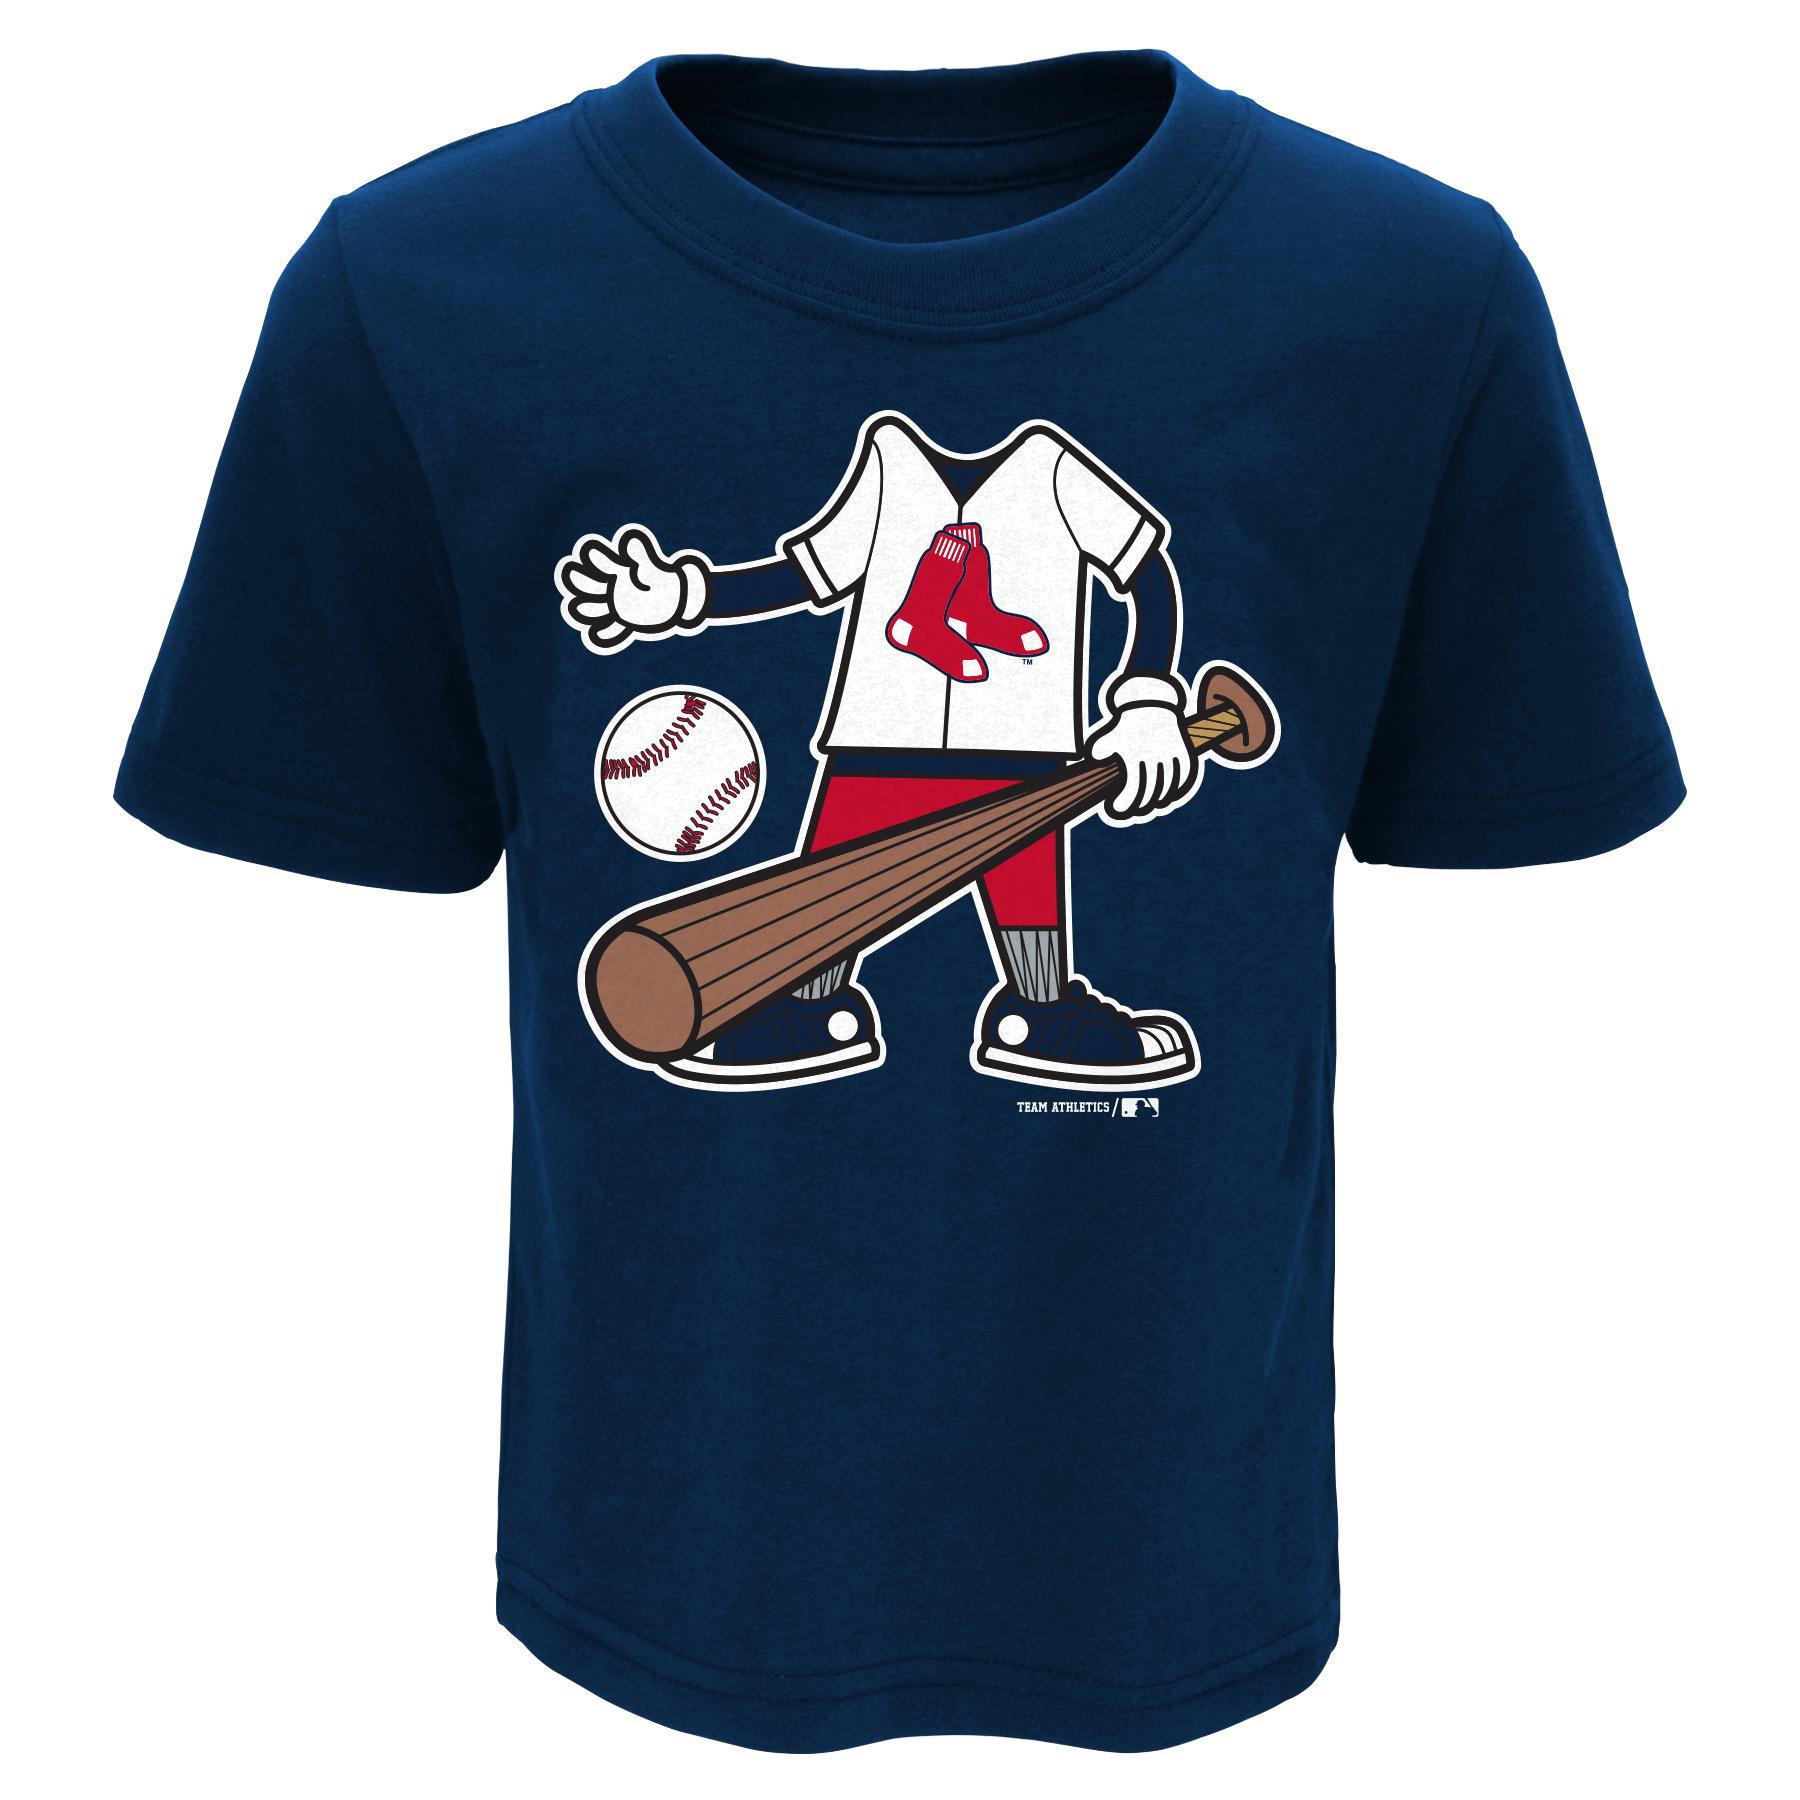 MLB Infant & Toddler Boy's T-Shirt - Boston Red Sox